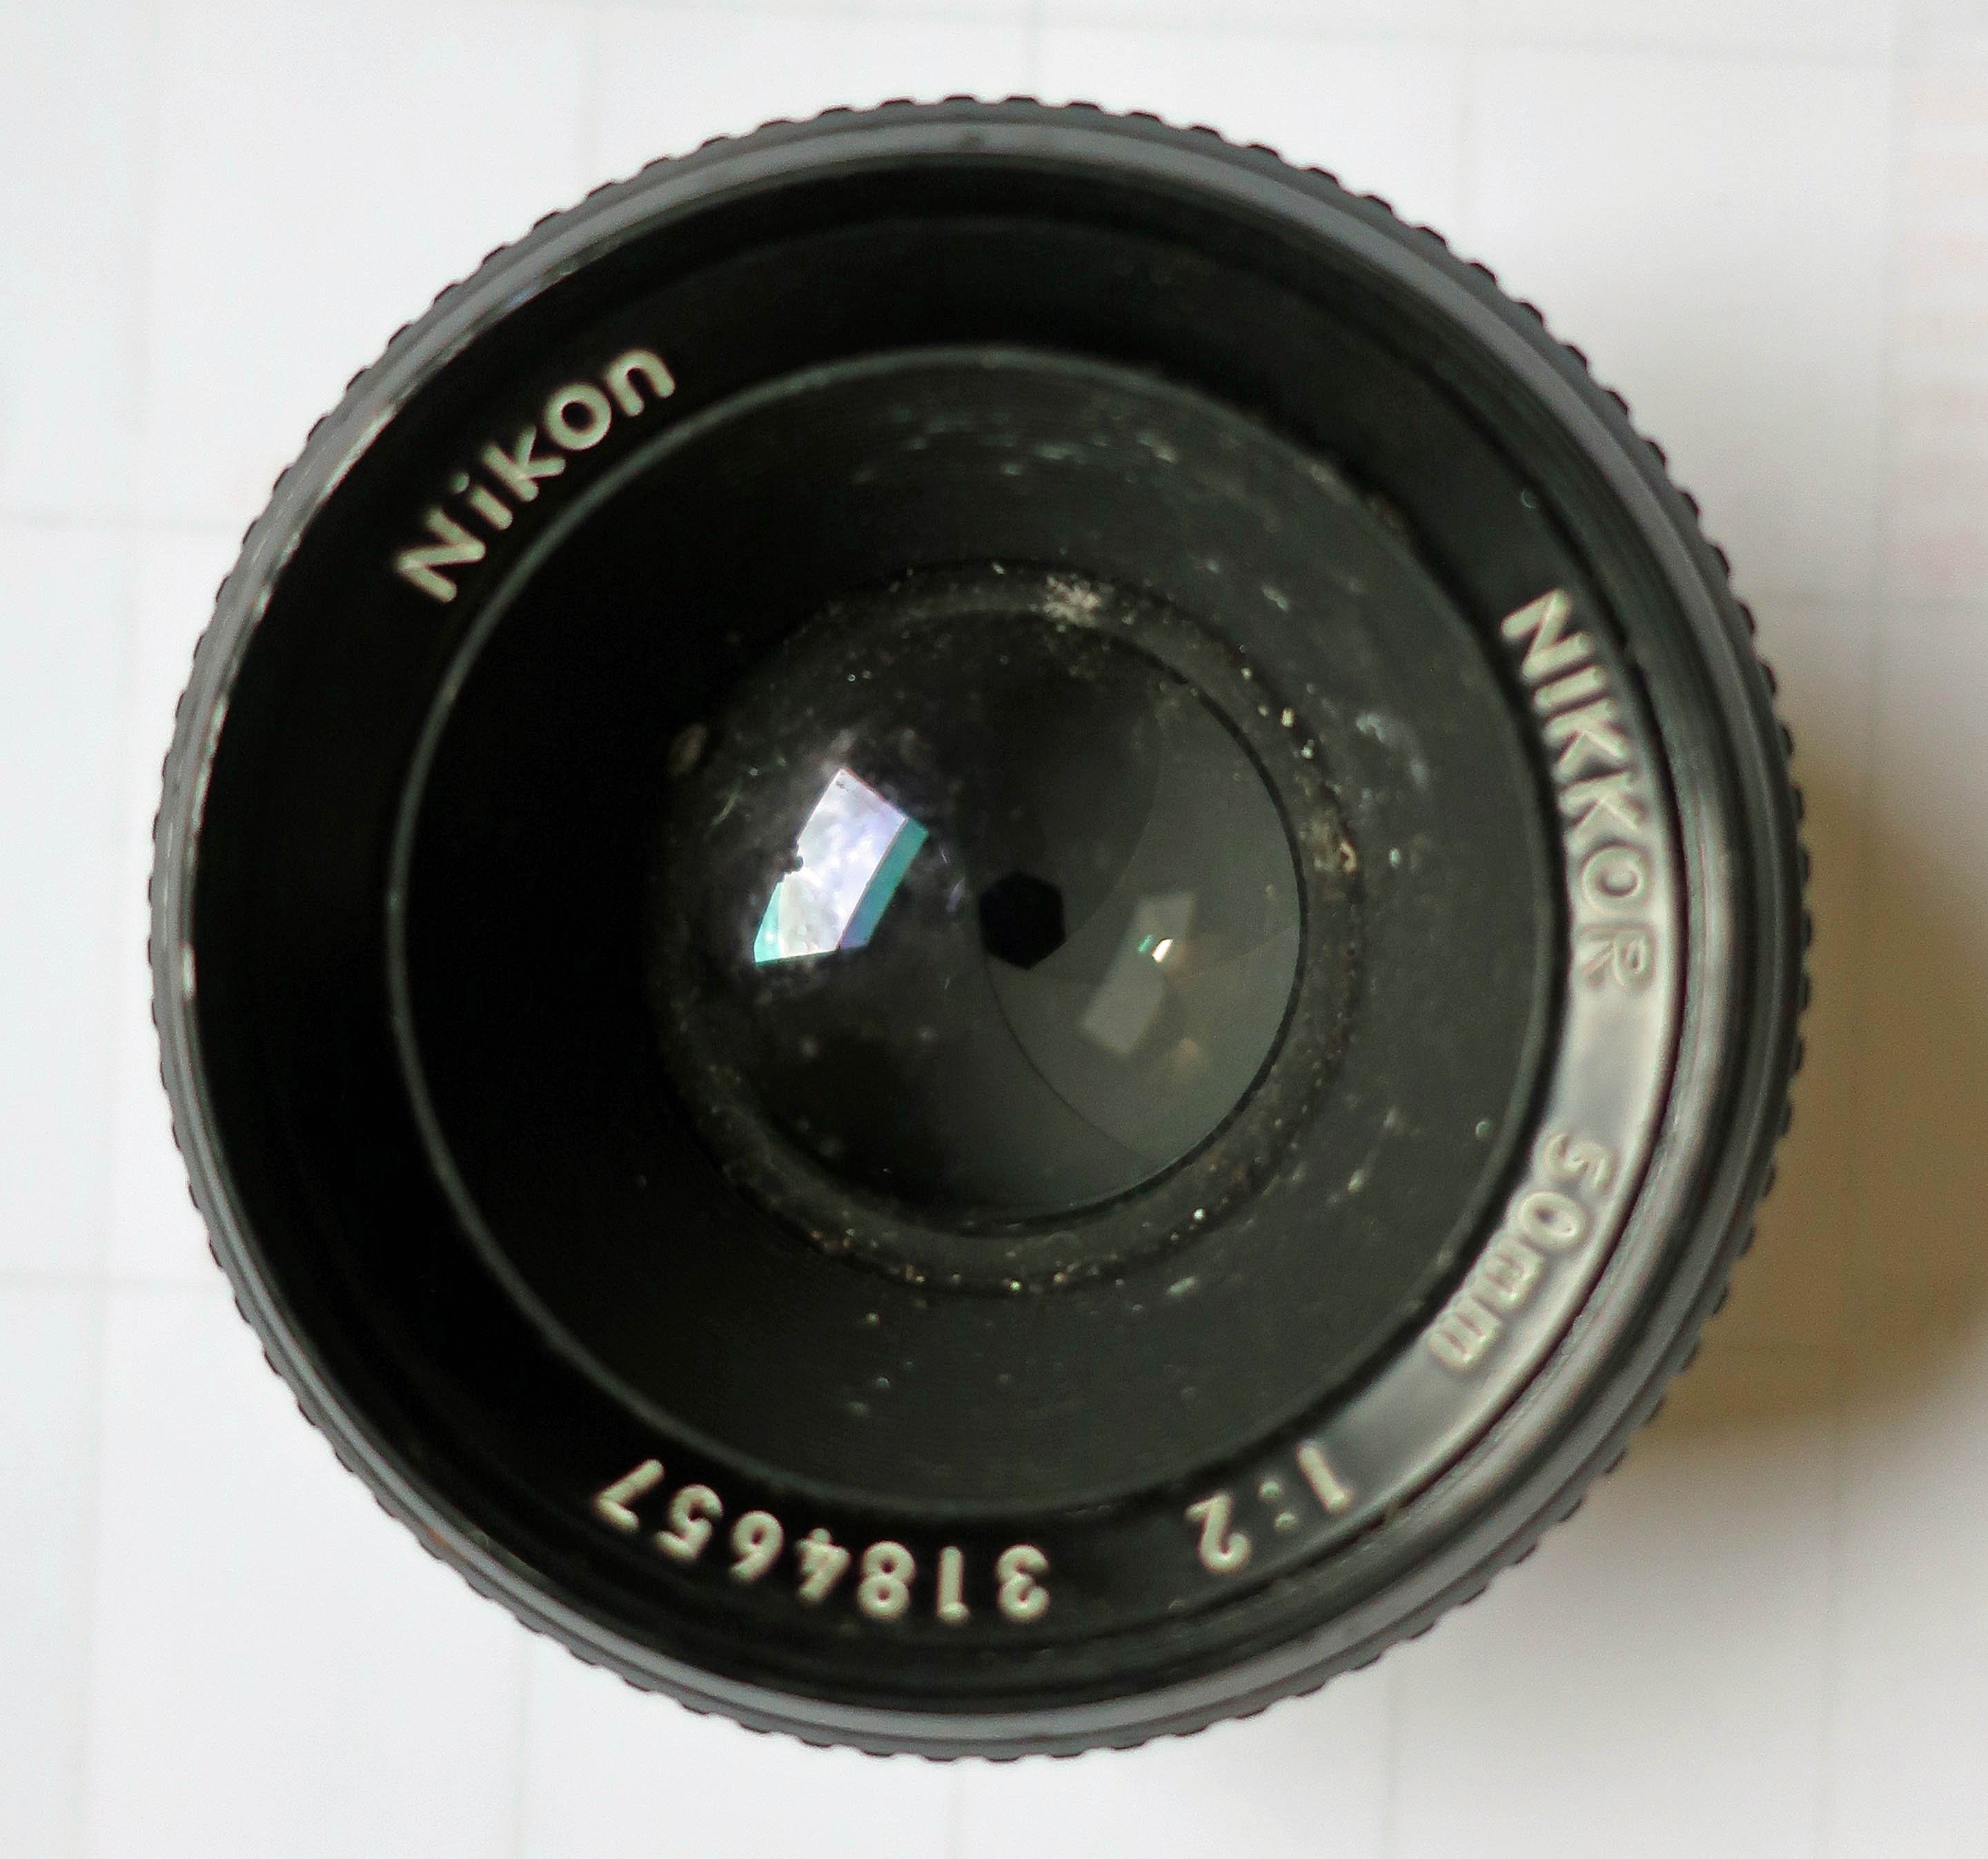 Objektiv	50 mm, 1:2 mit Nikon Bajonettverschluss (museum comp:ex CC BY-NC-SA)